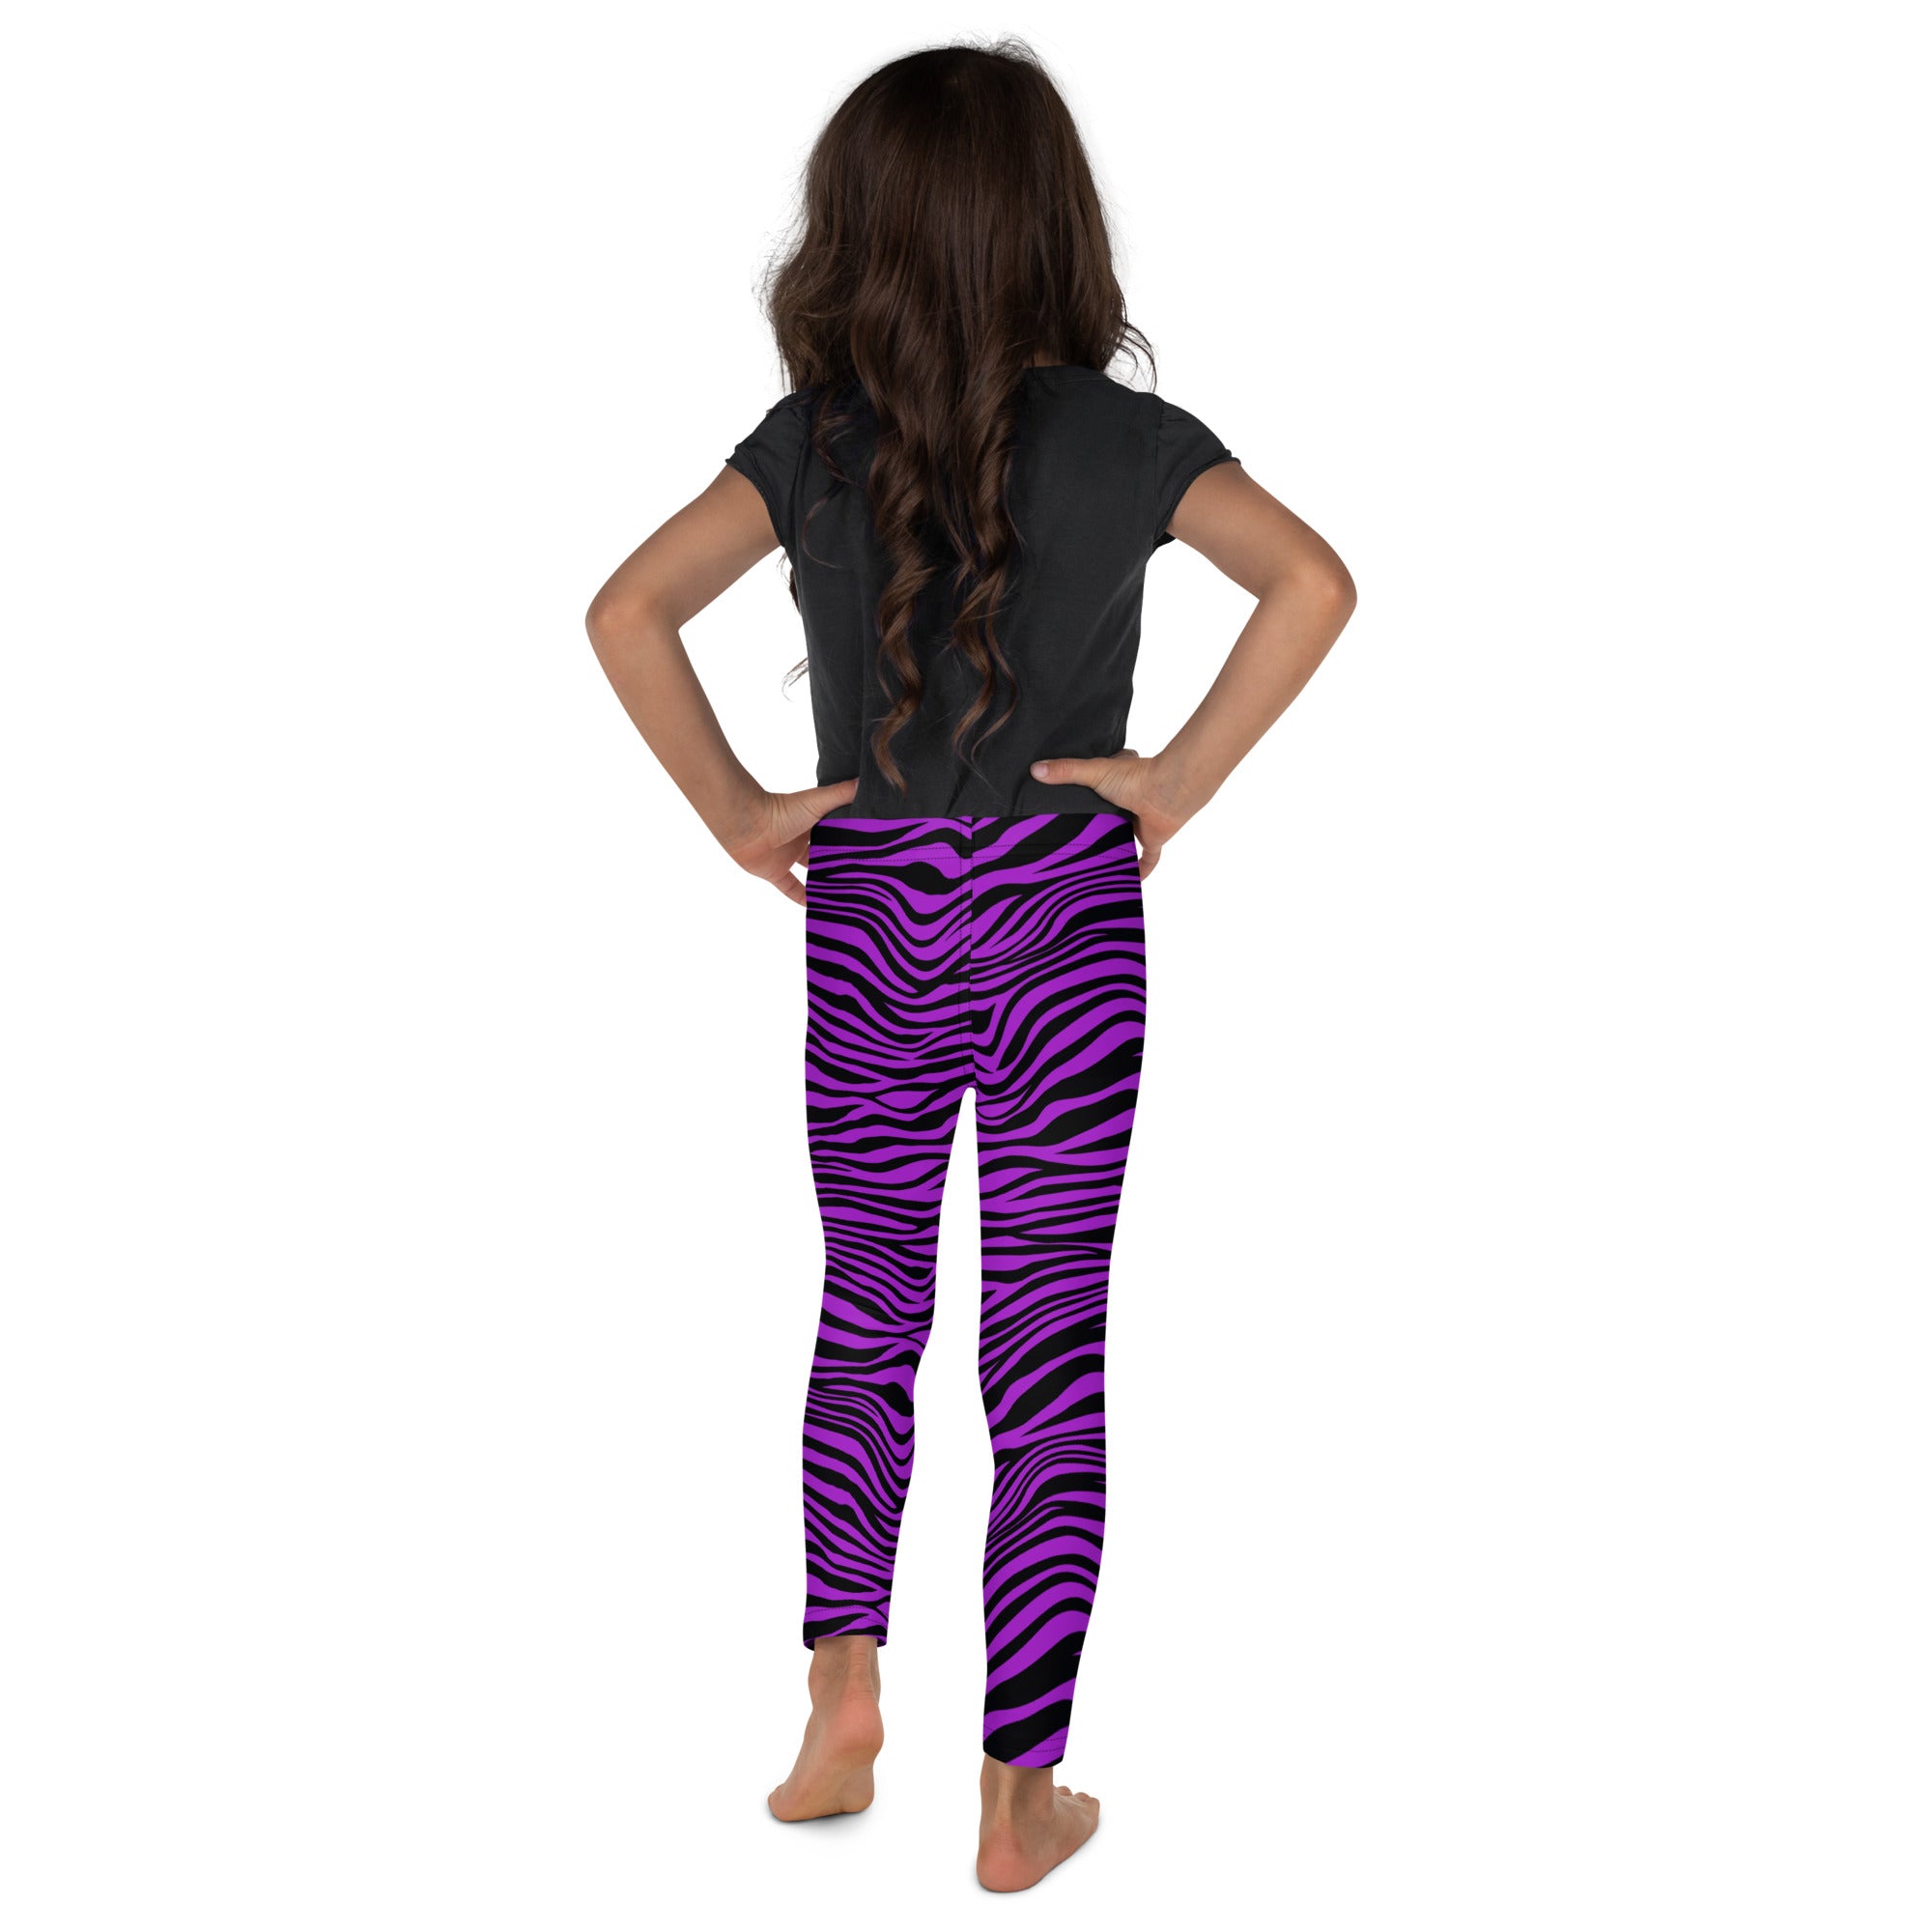 Kid's Leggings- Zebra Black and Purple